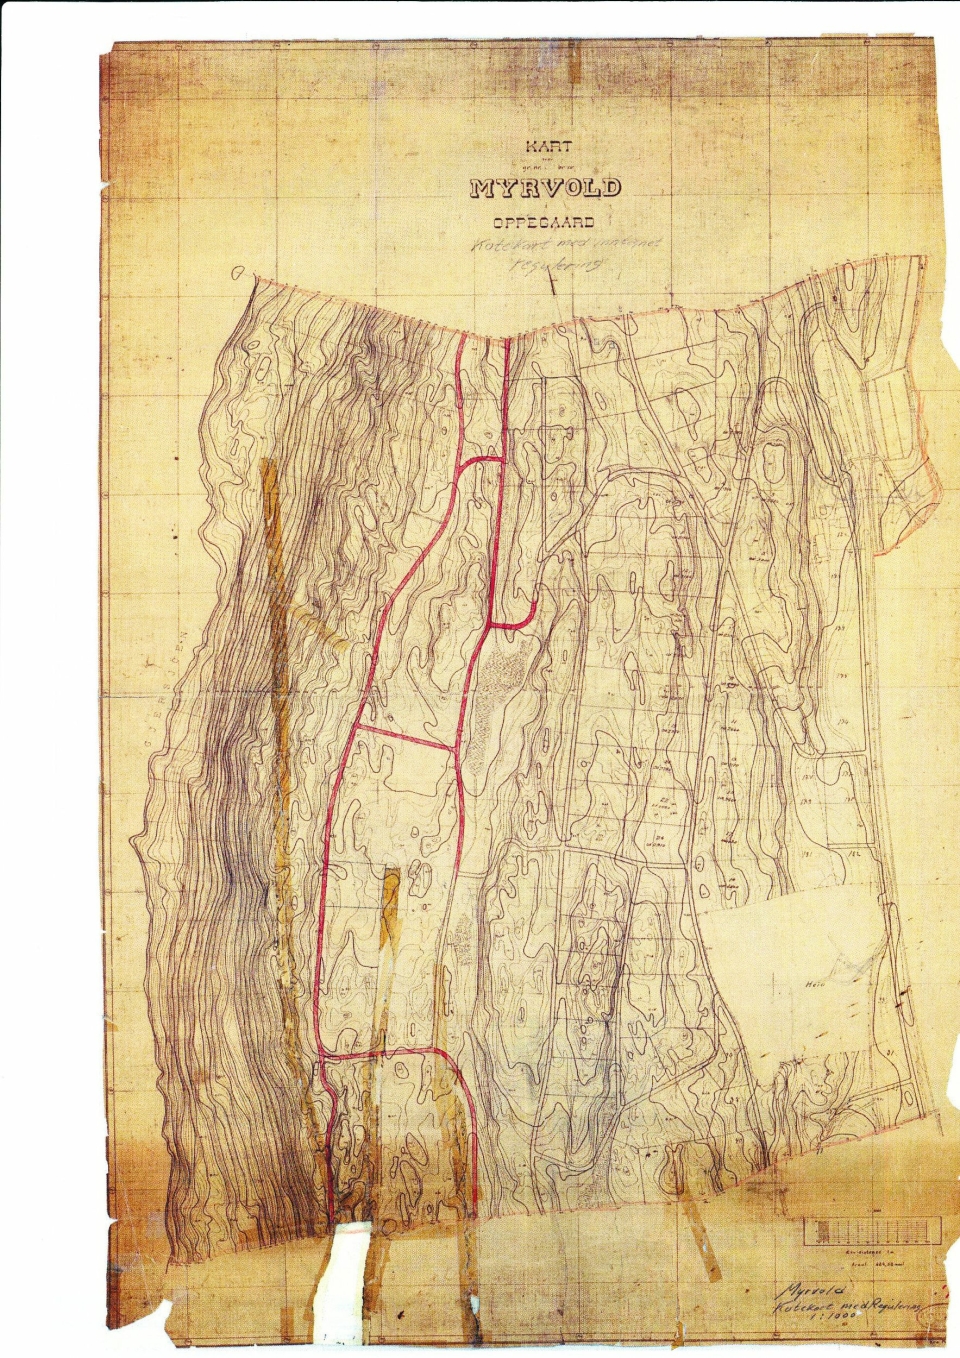 MYRVOLD 1942: Her kan du se kartet av Myrvoll fra 1942.